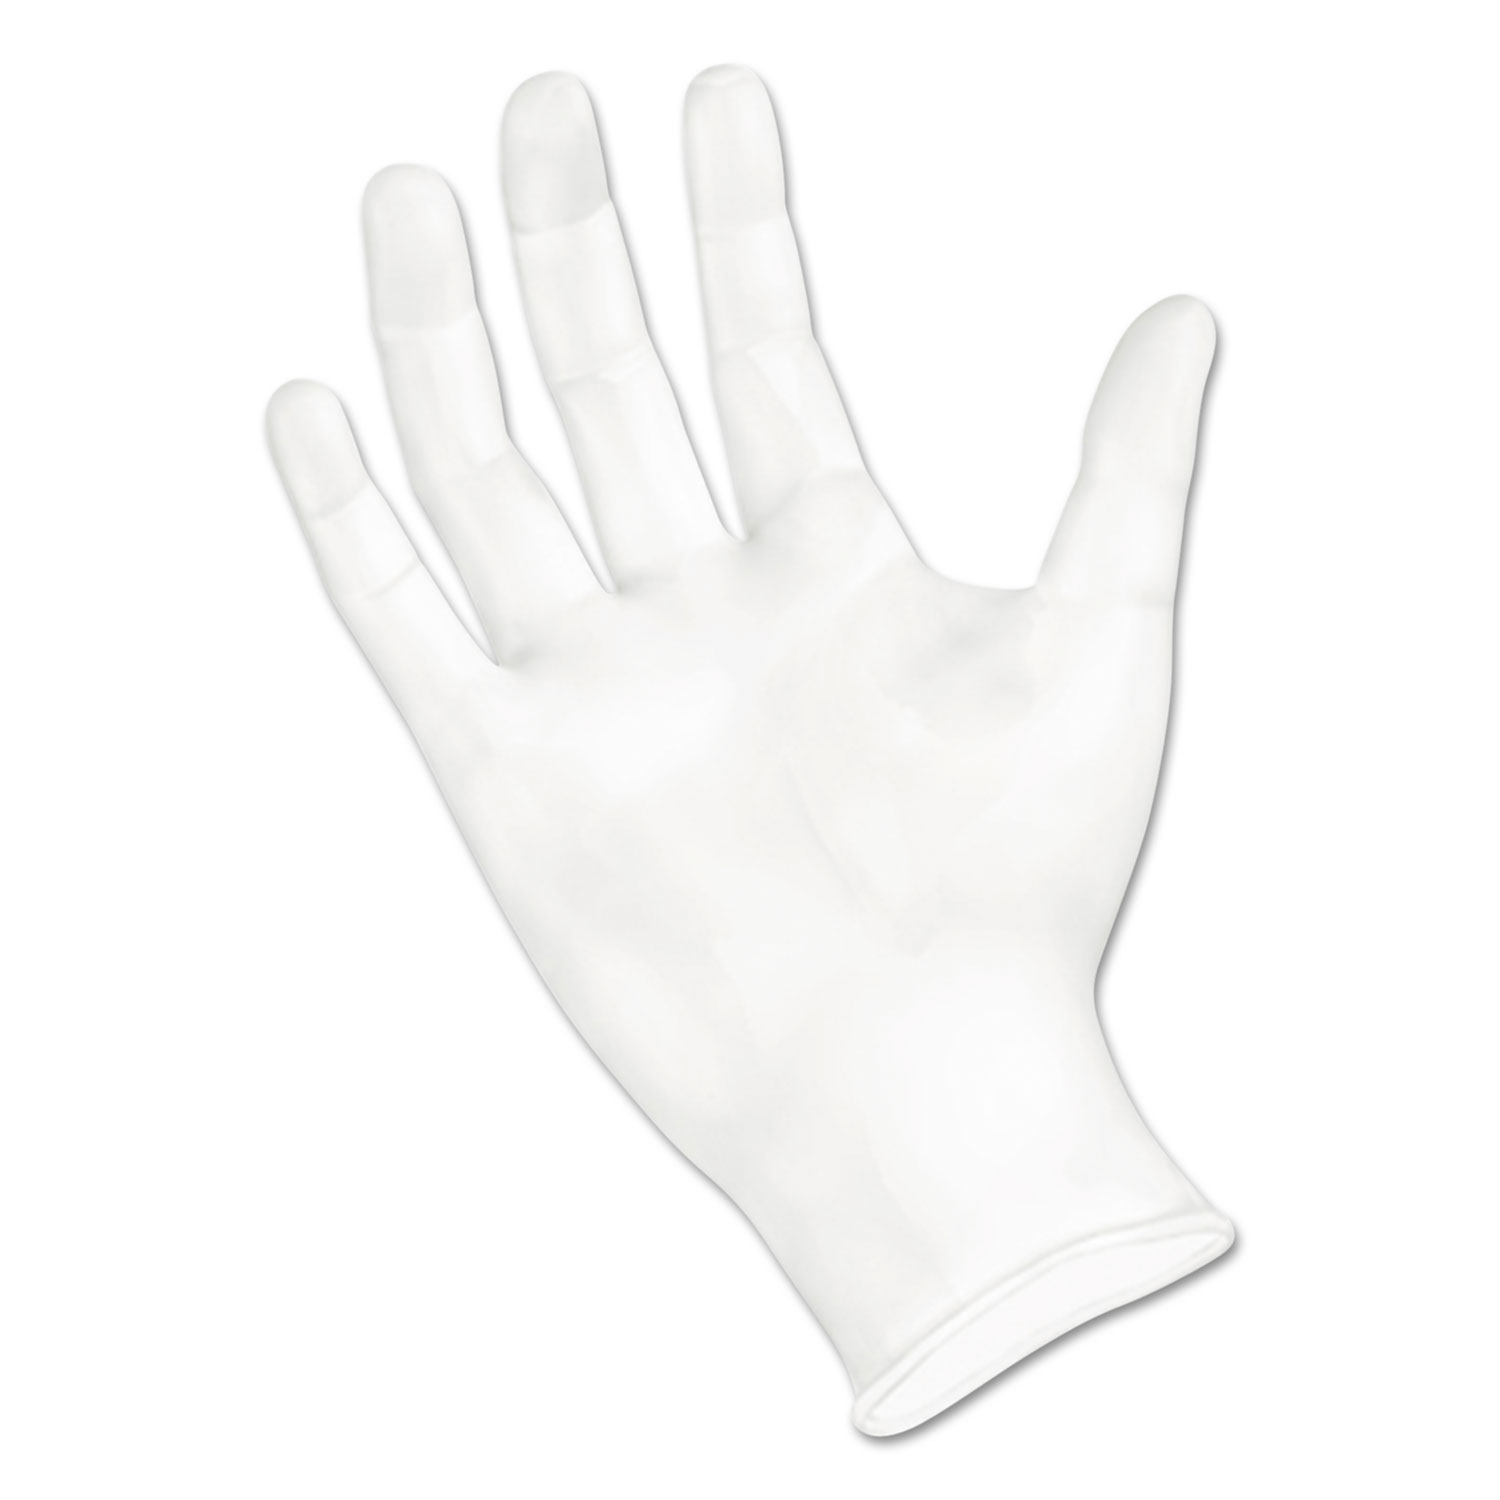 General Purpose Vinyl Gloves, Powder/Latex-Free, 2 3/5mil, X-Large, Clear,100/BX